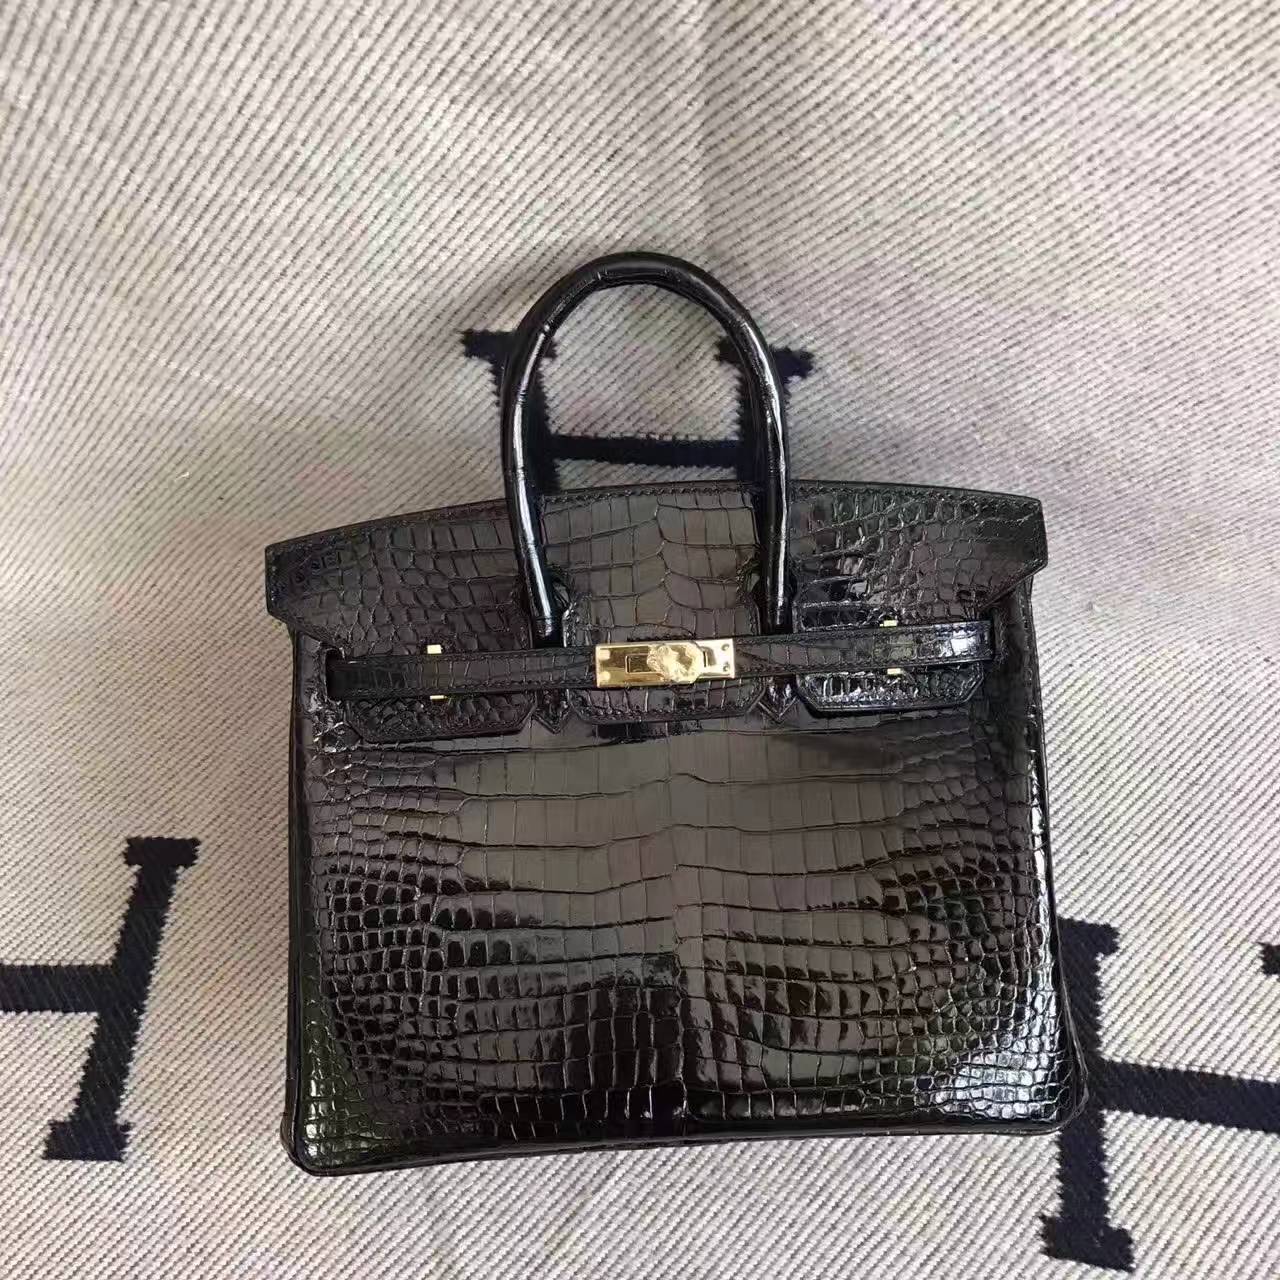 Wholesale Hermes Birkin Bag 25cm in CK89 Black Crocodile Shiny Leather